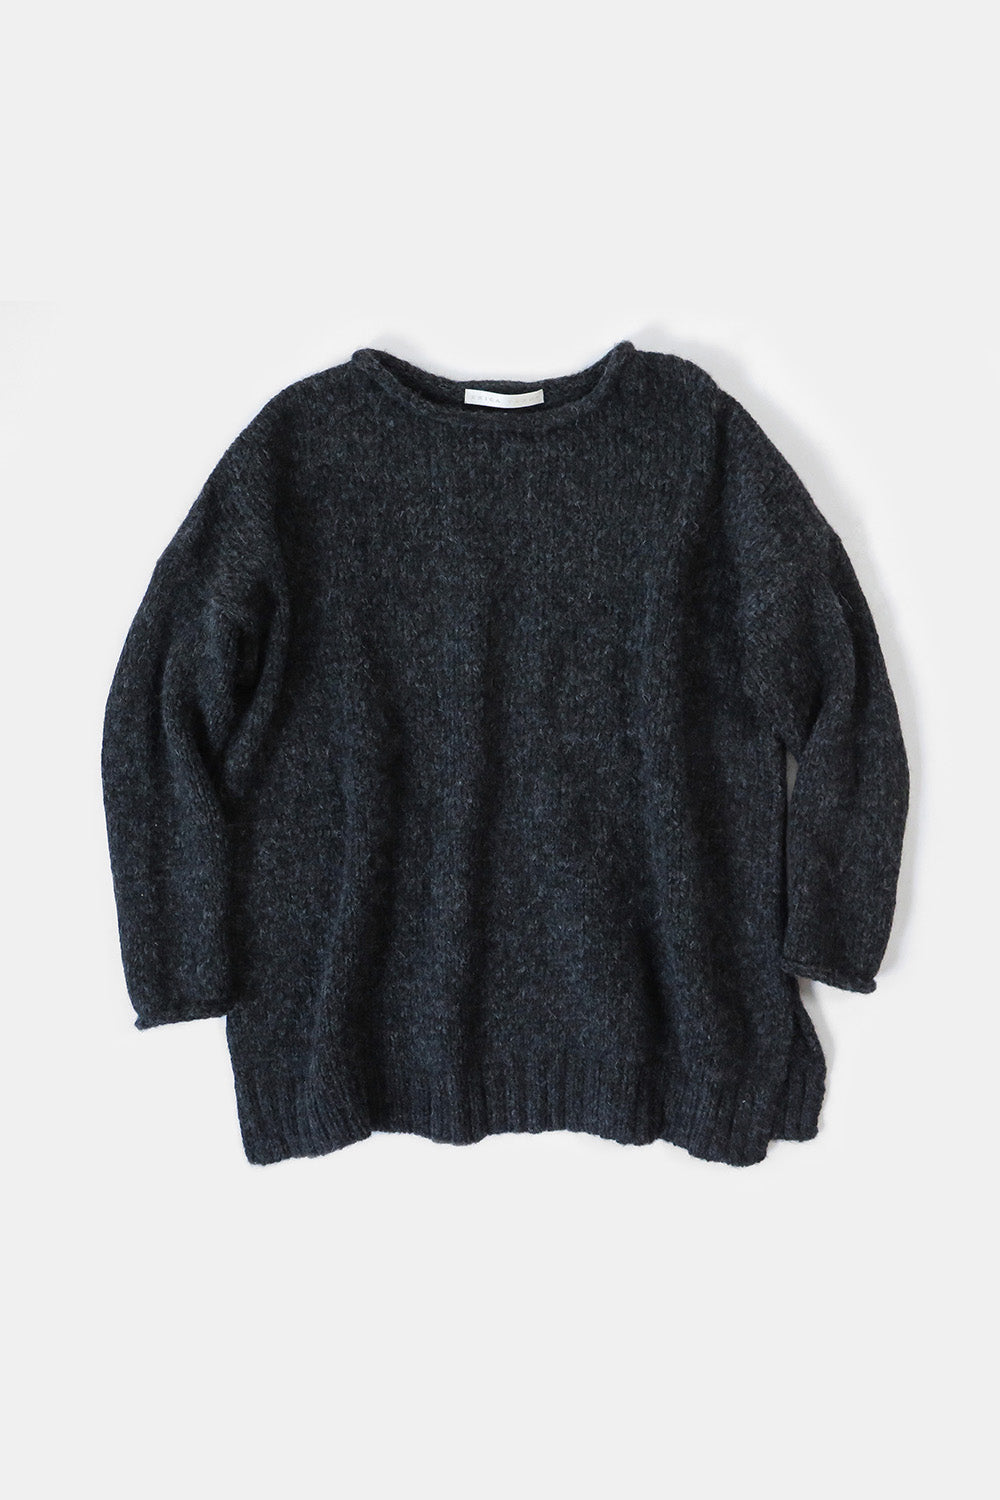 Alpaca Rollneck Sweater in Charcoal